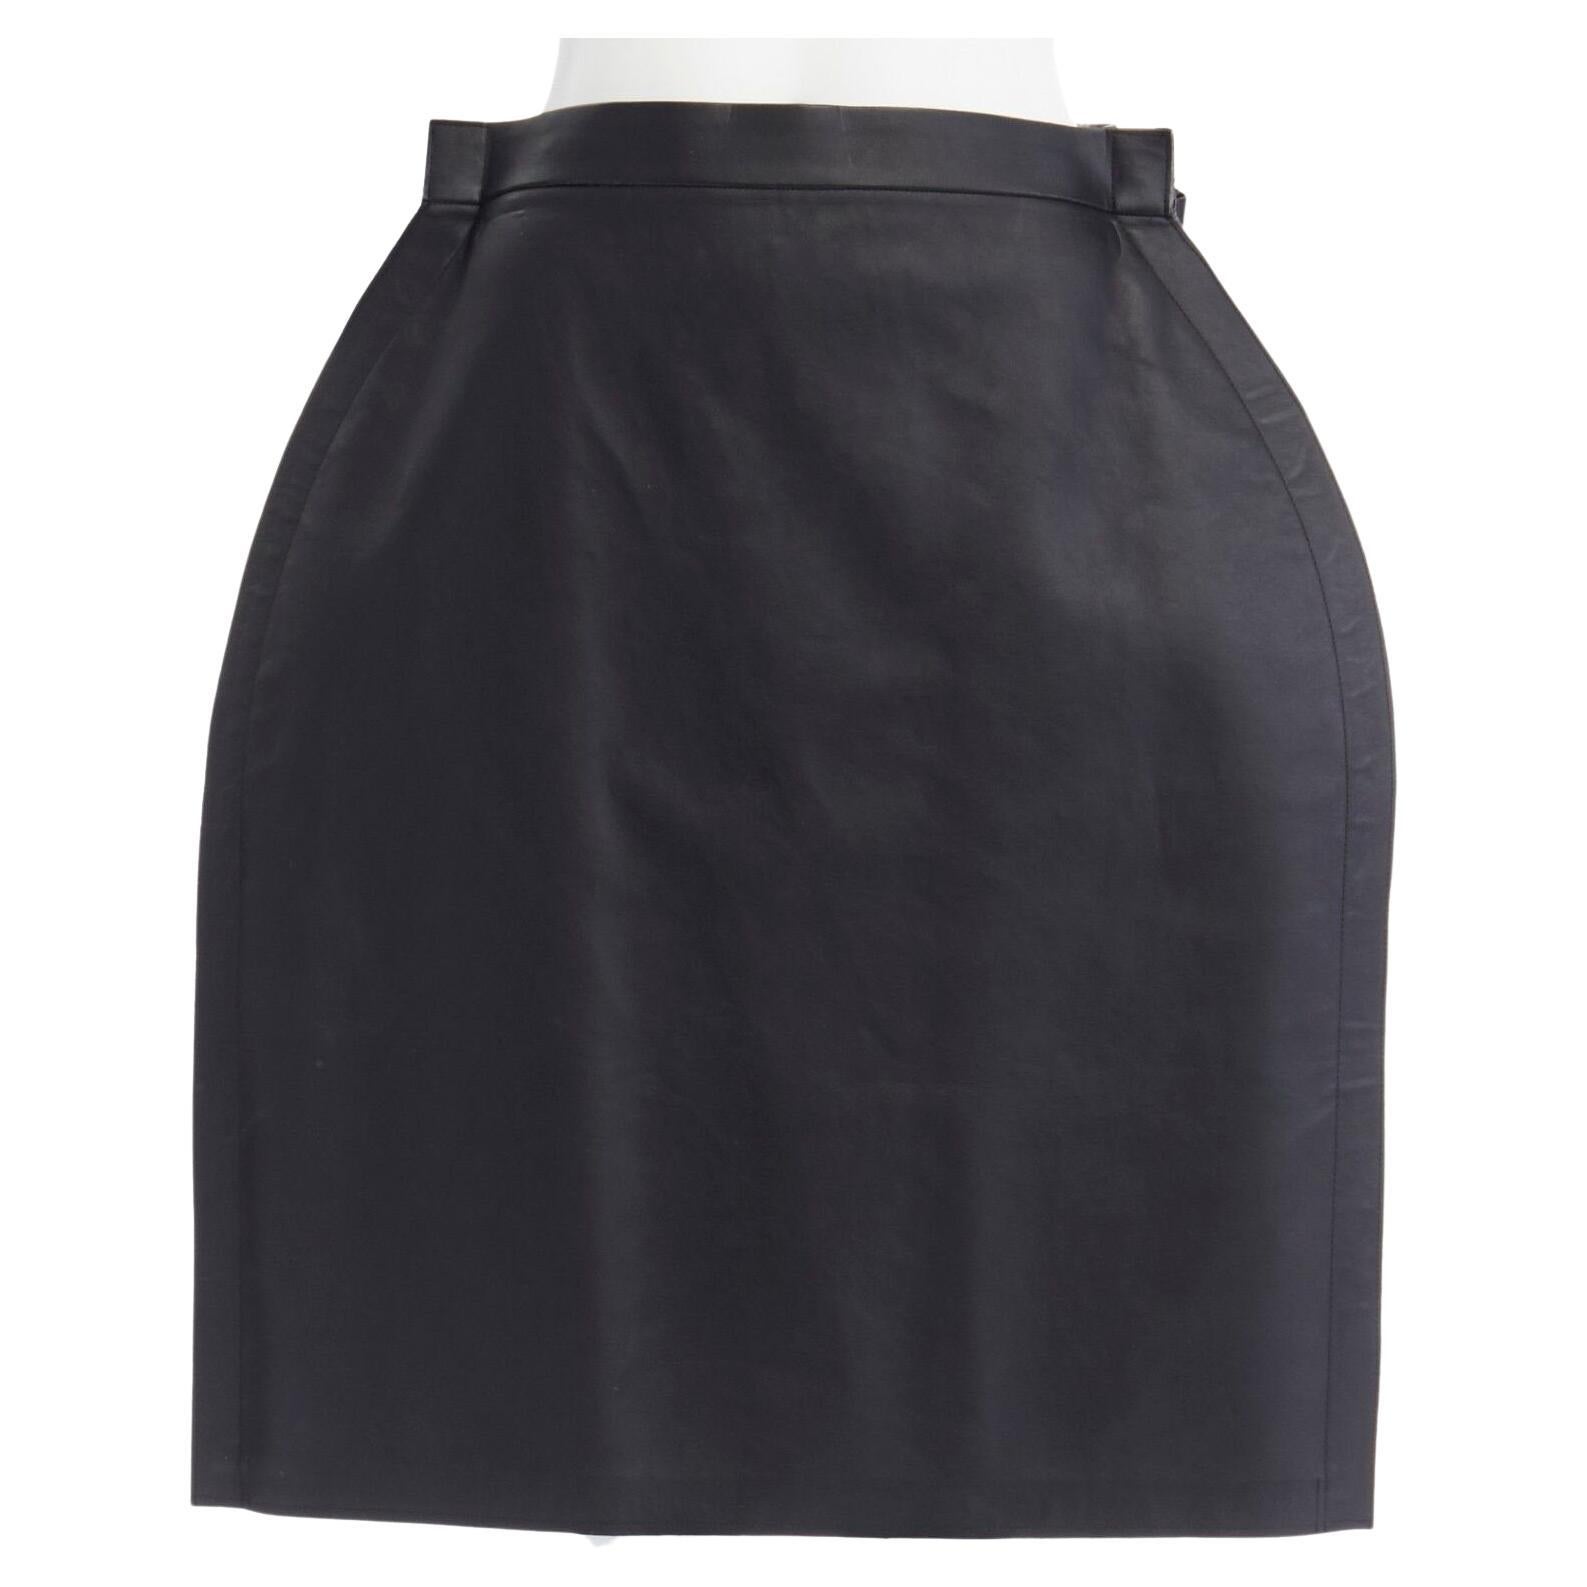 runway JUNYA WATANABE SS2015 2D Flatpack black circle structured skirt S 27"